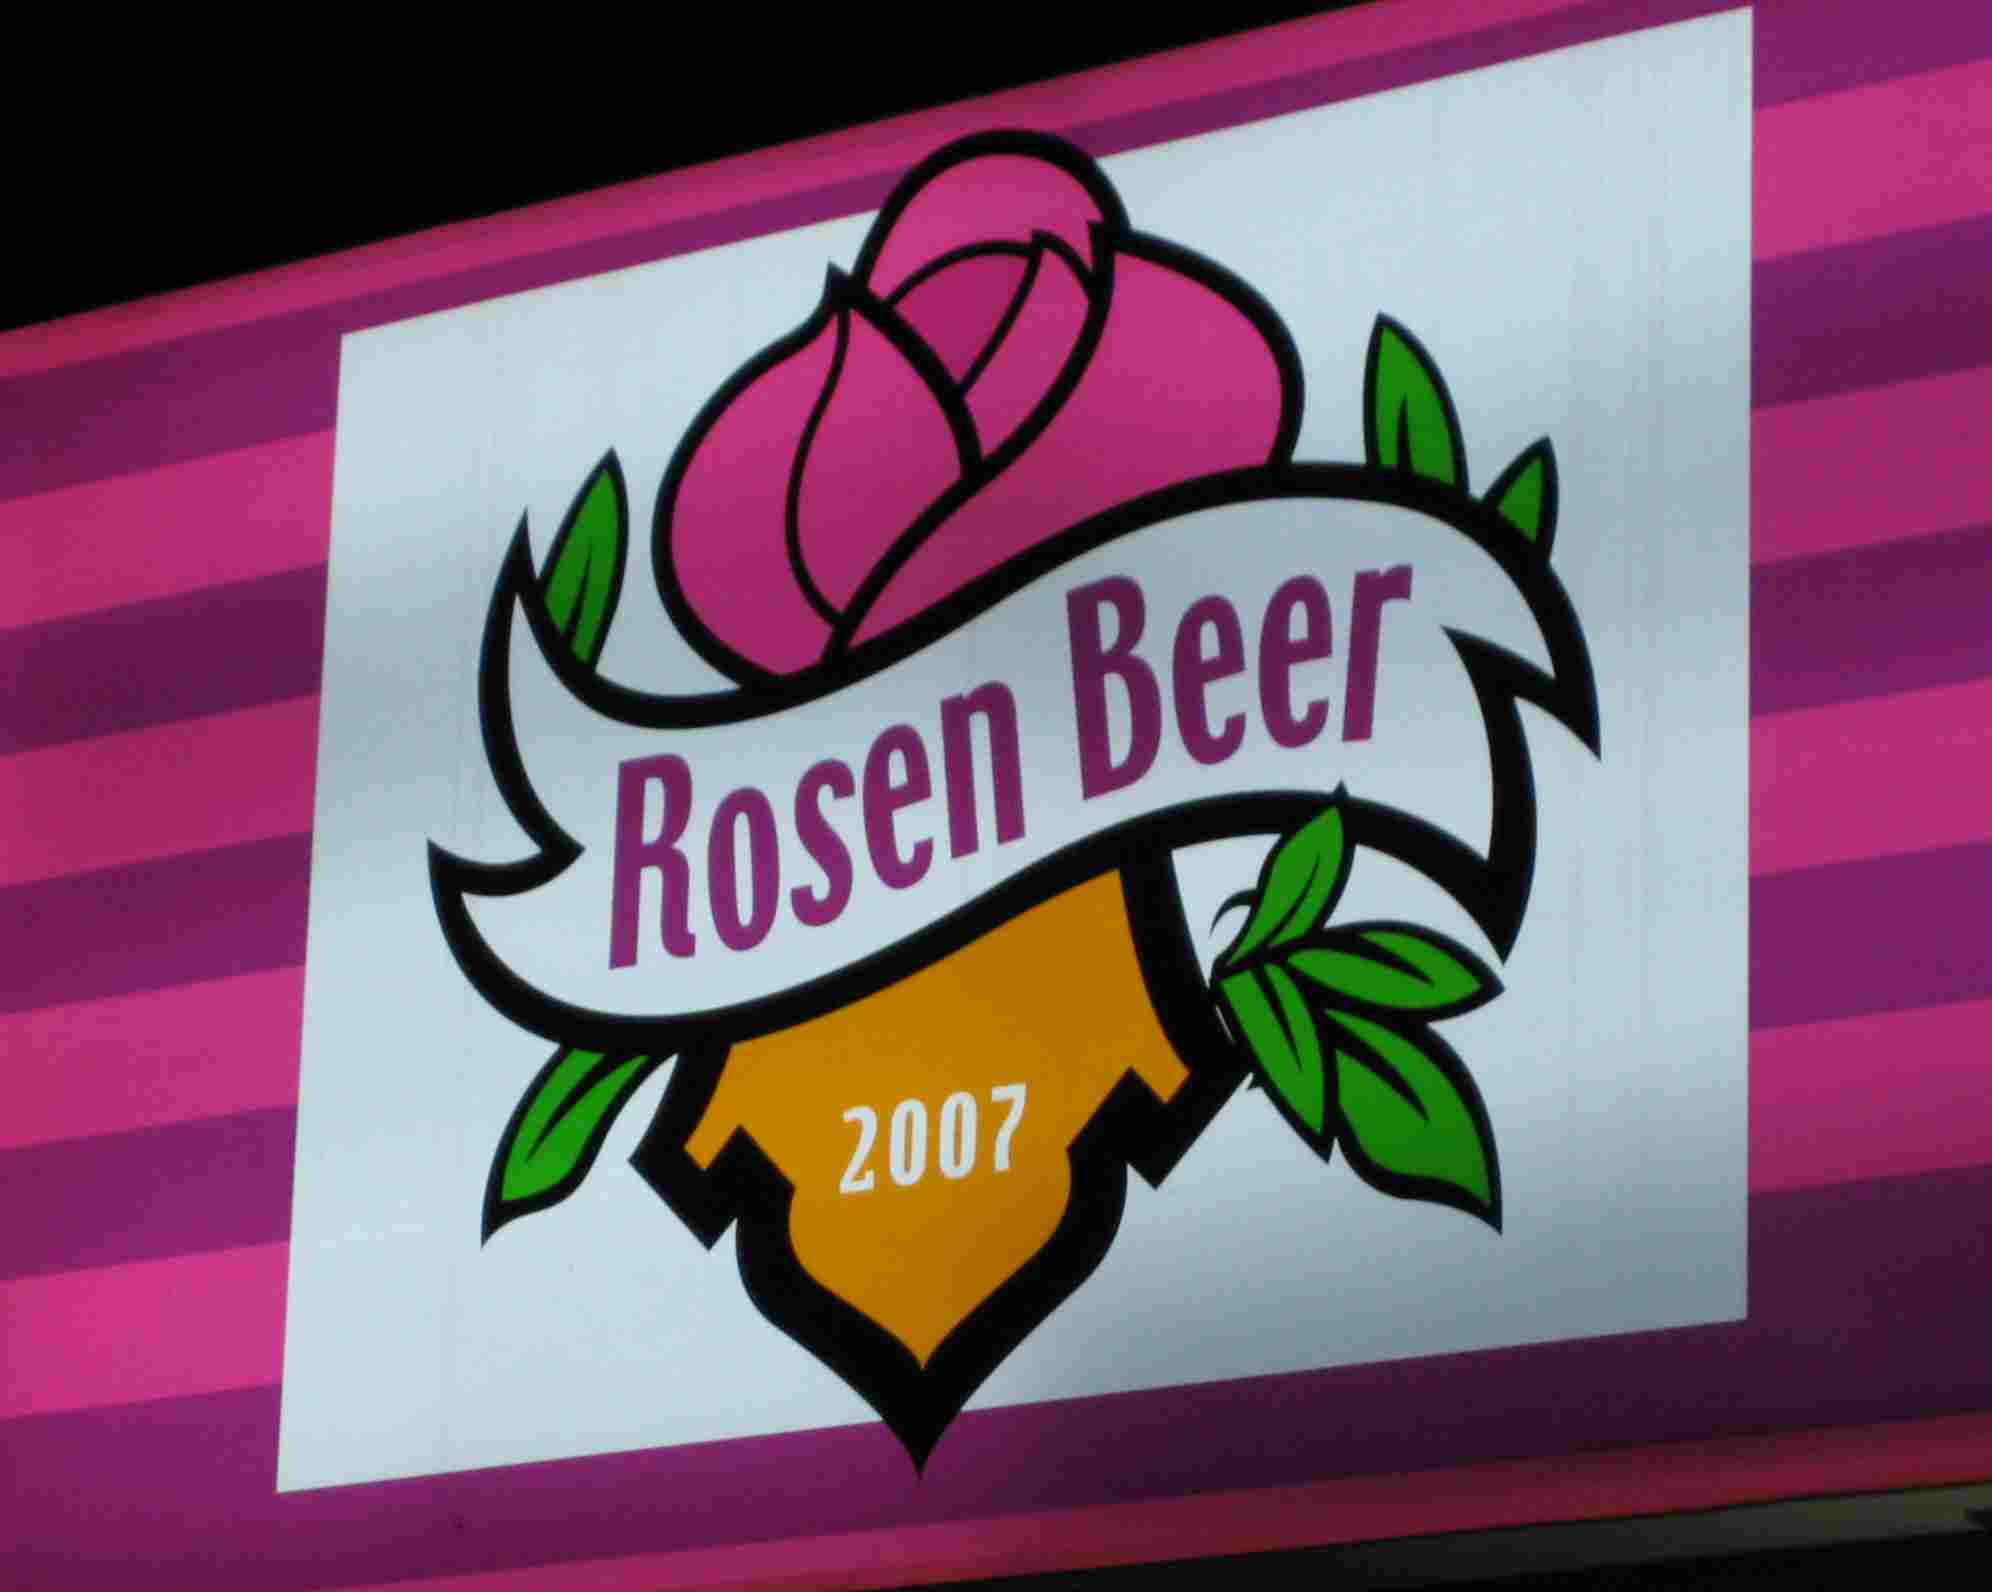 Rosen beer